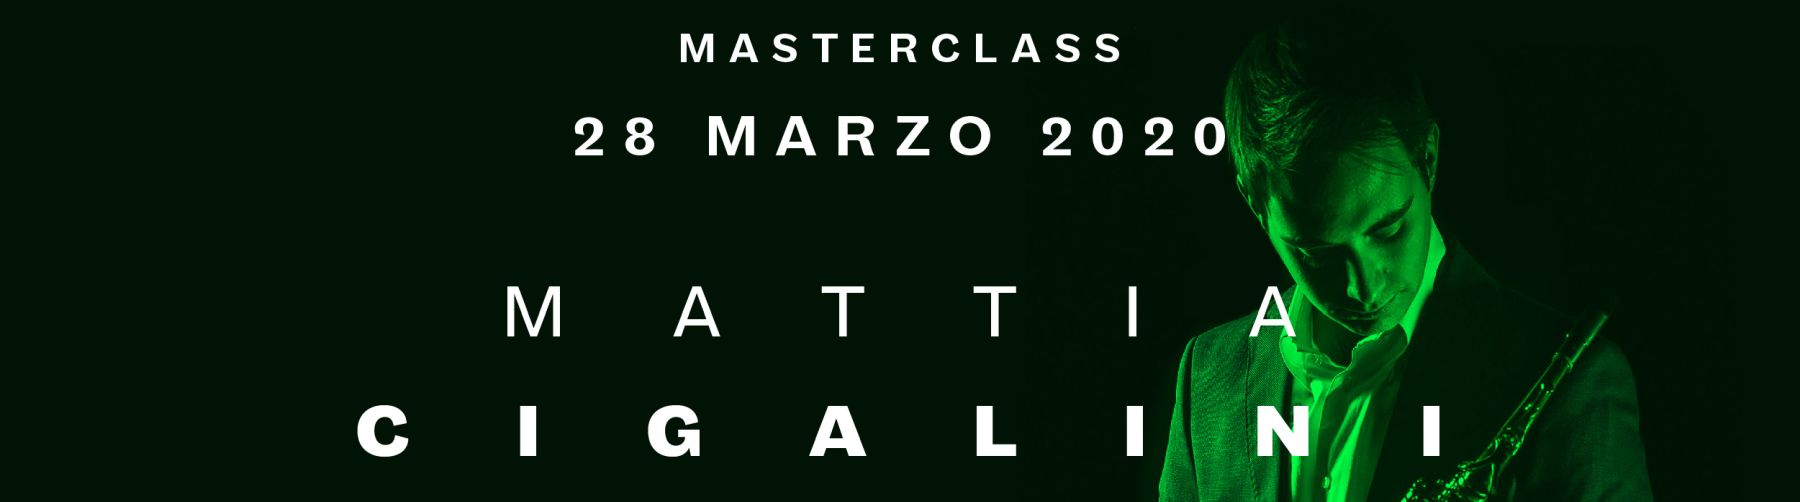 MASTERCLASS - MATTIA CIGALINI 2020